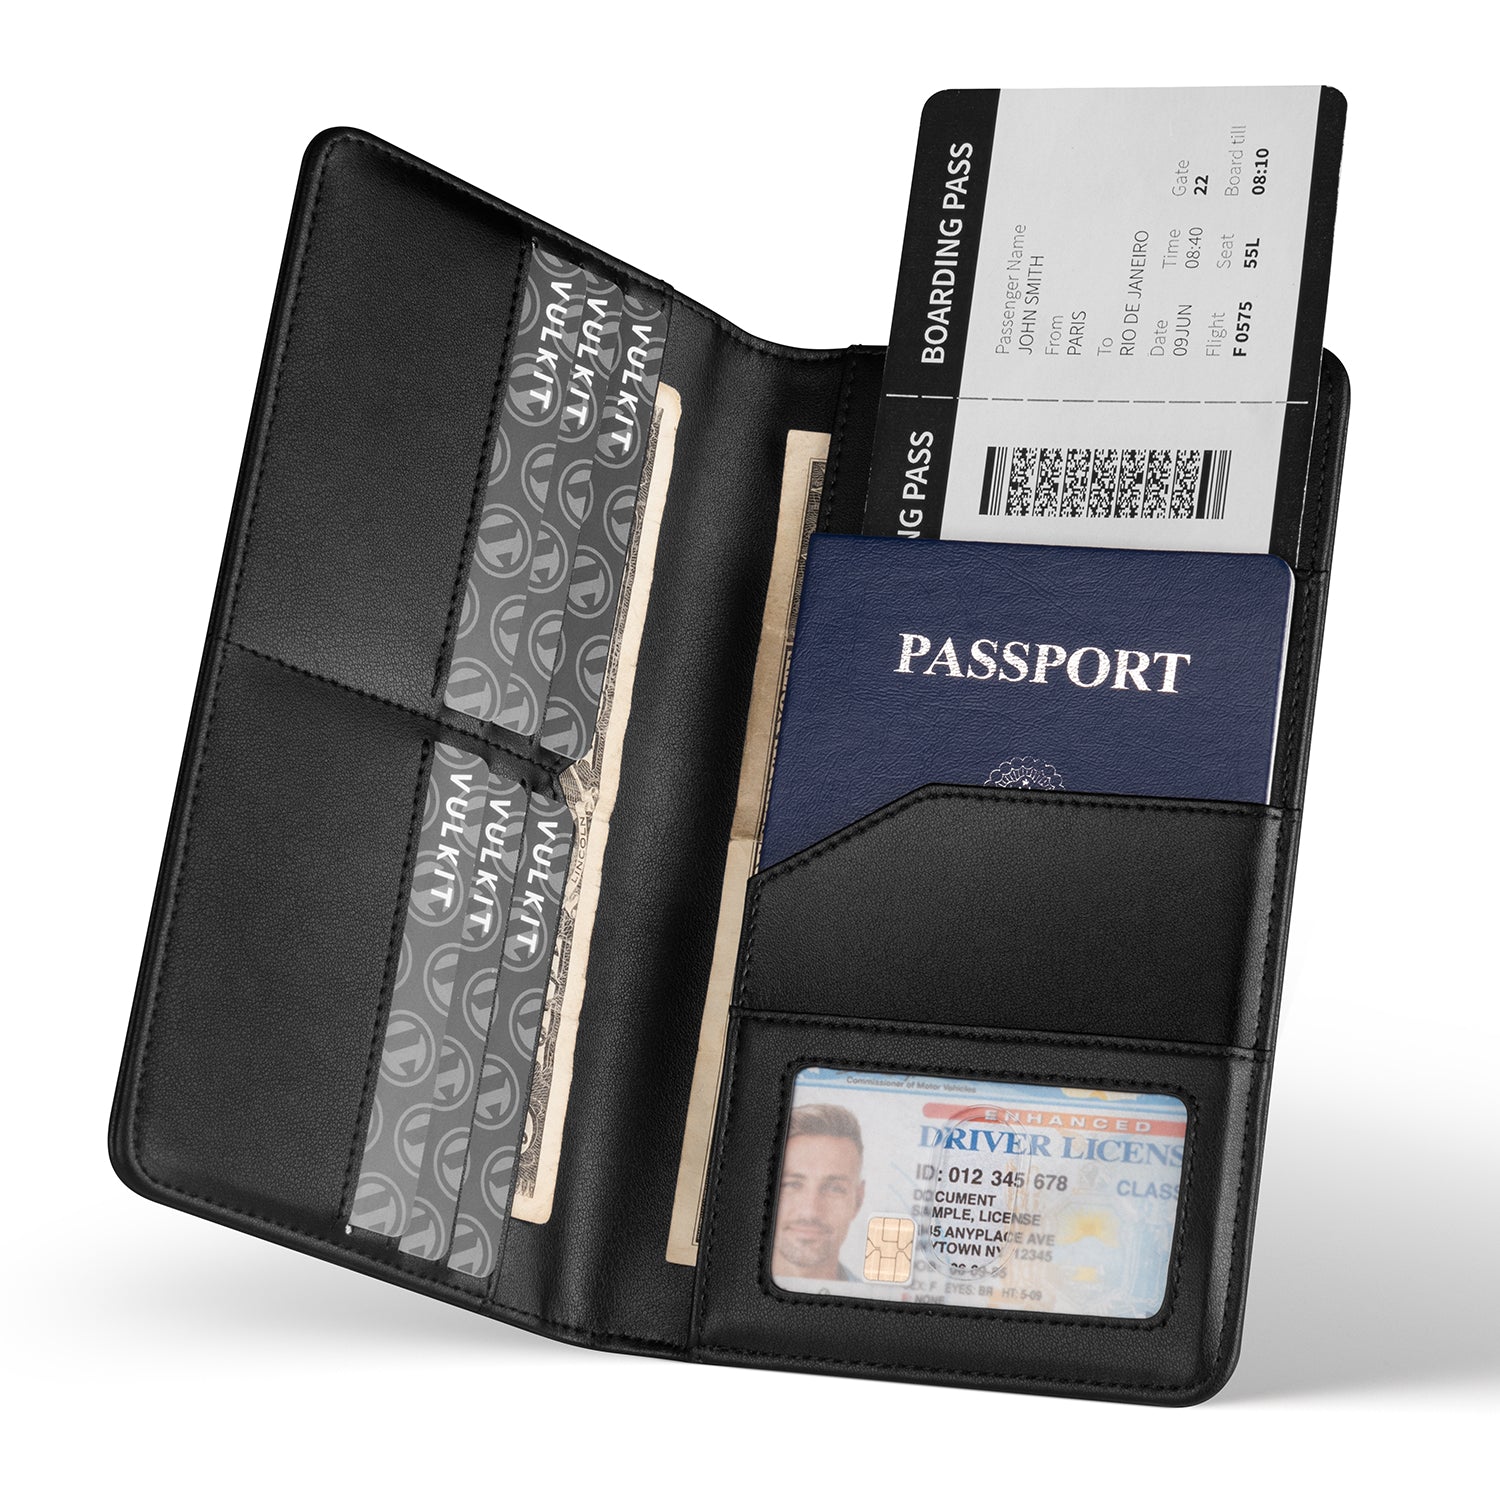 Passport Holder Wallet - Brilliant Promos - Be Brilliant!